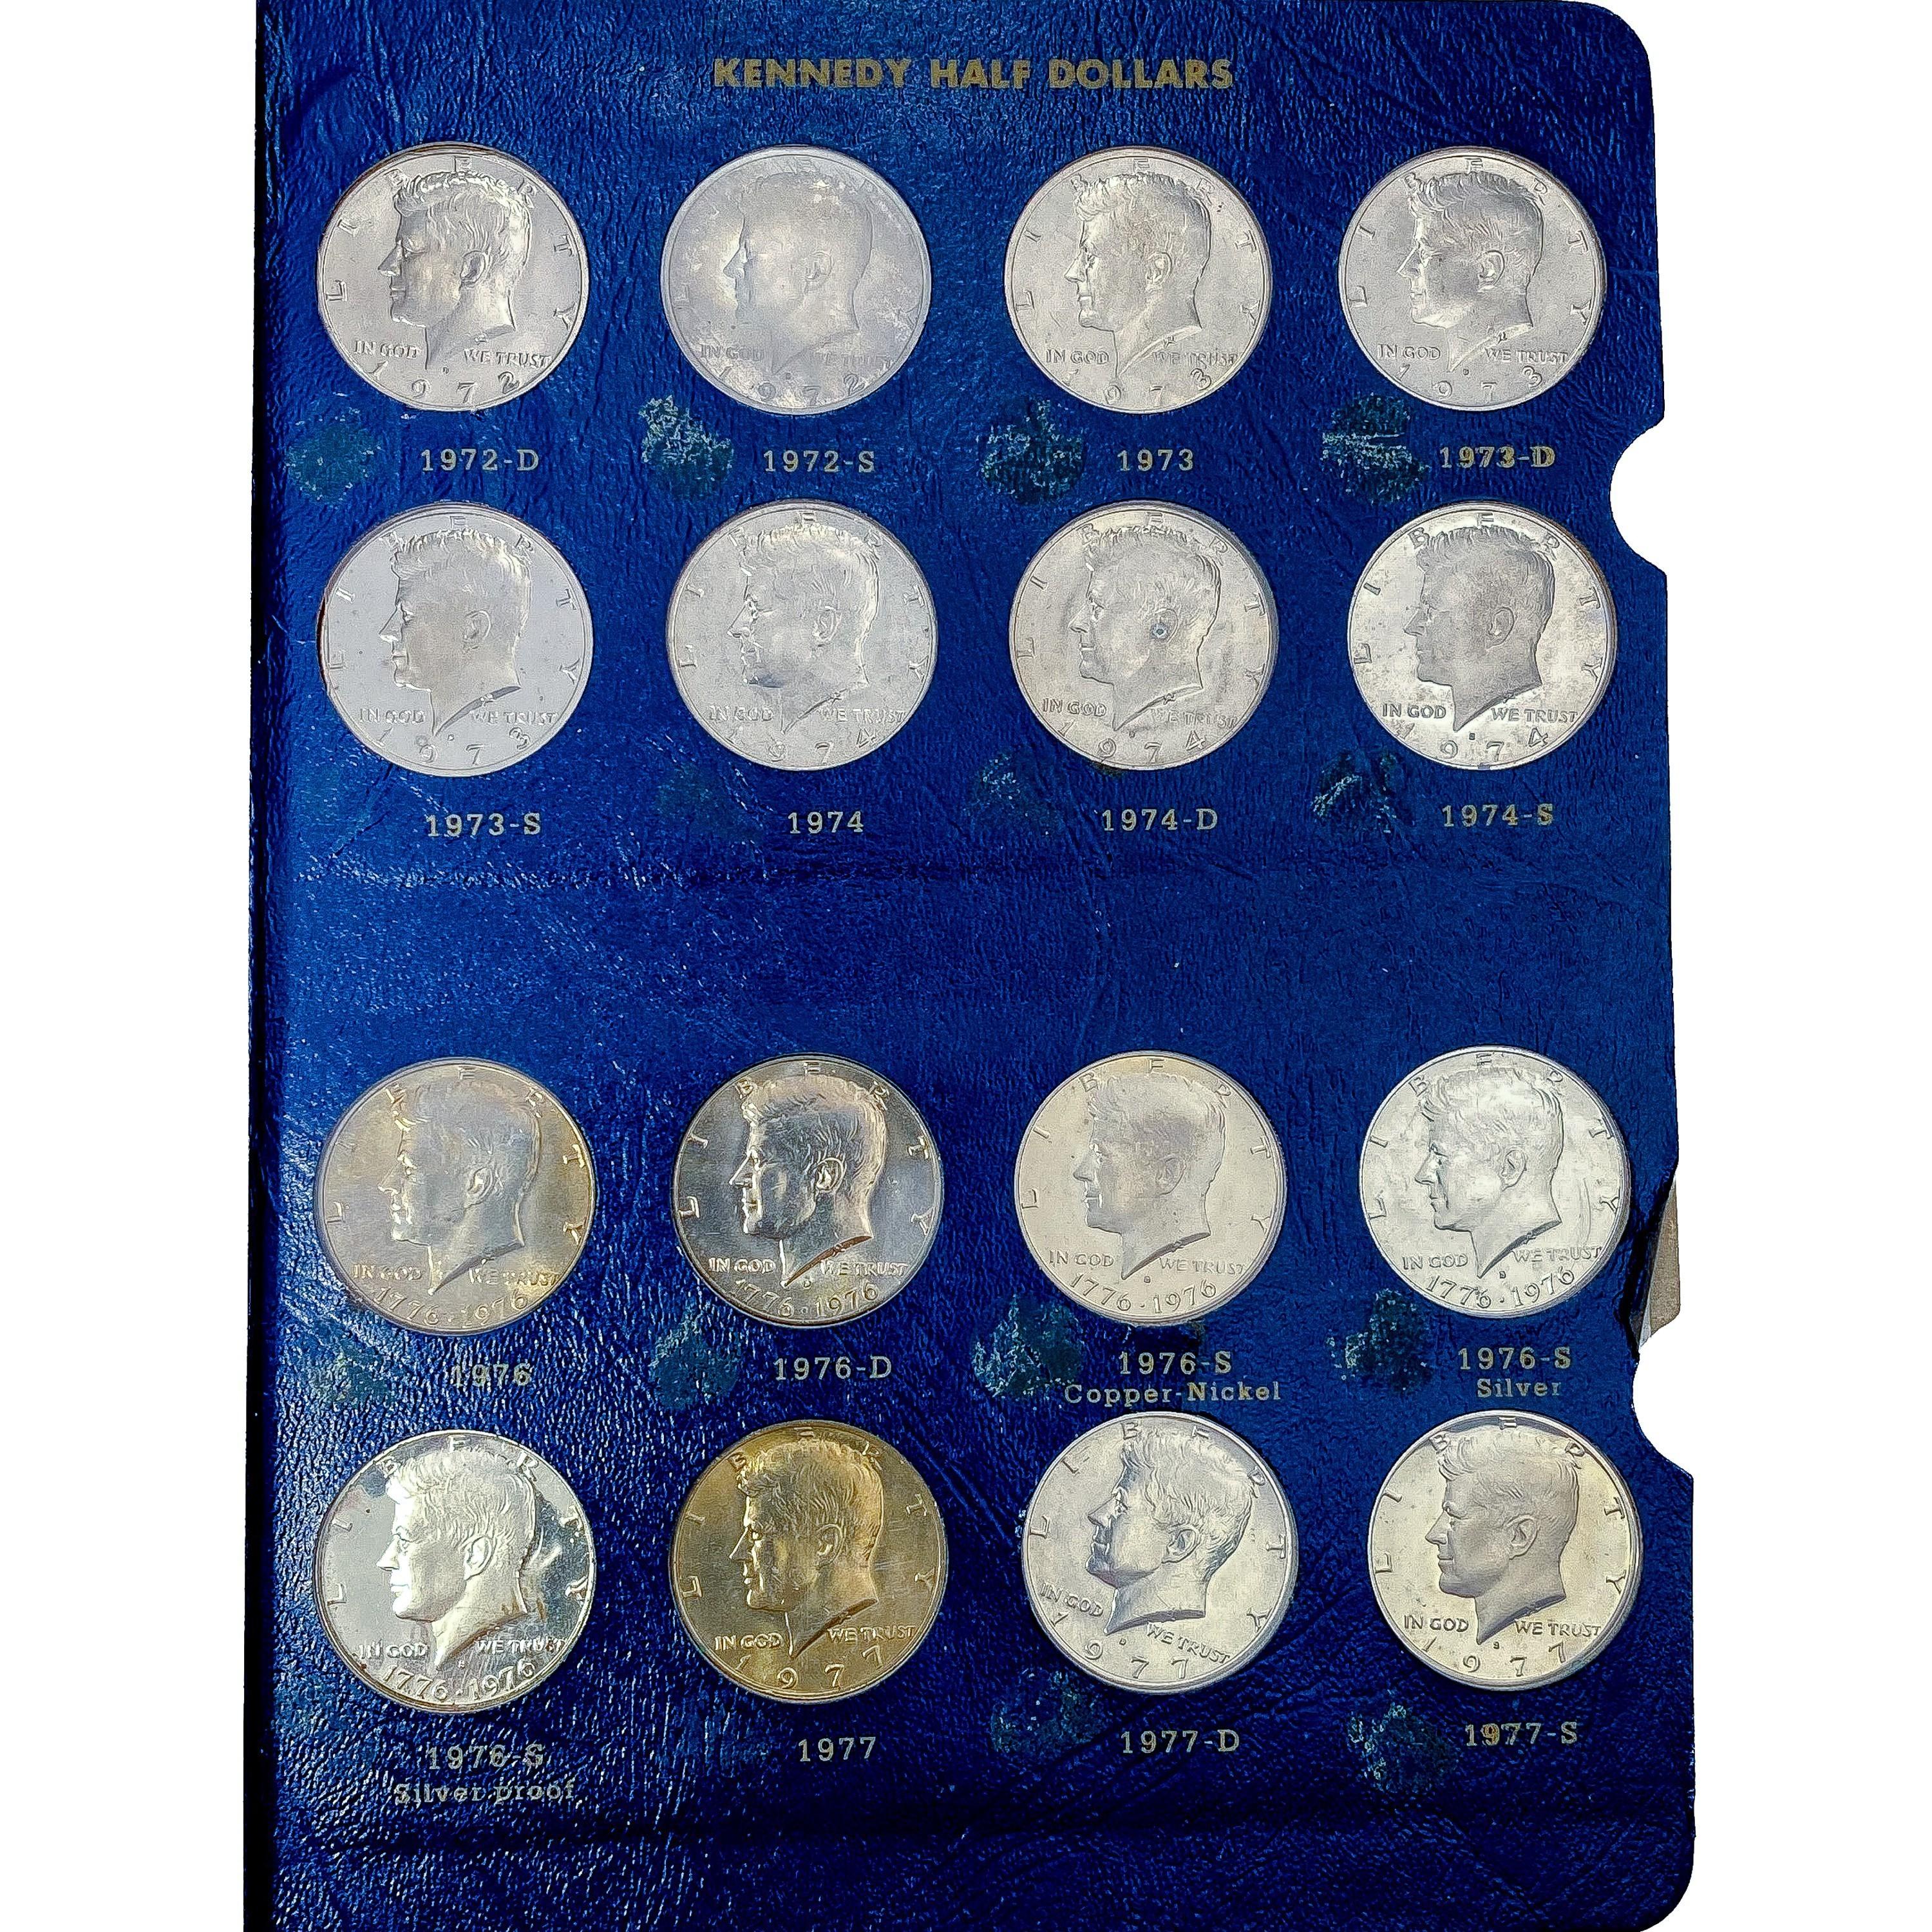 1964-1996 Kennedy Half Dollars Book (64 Coins)